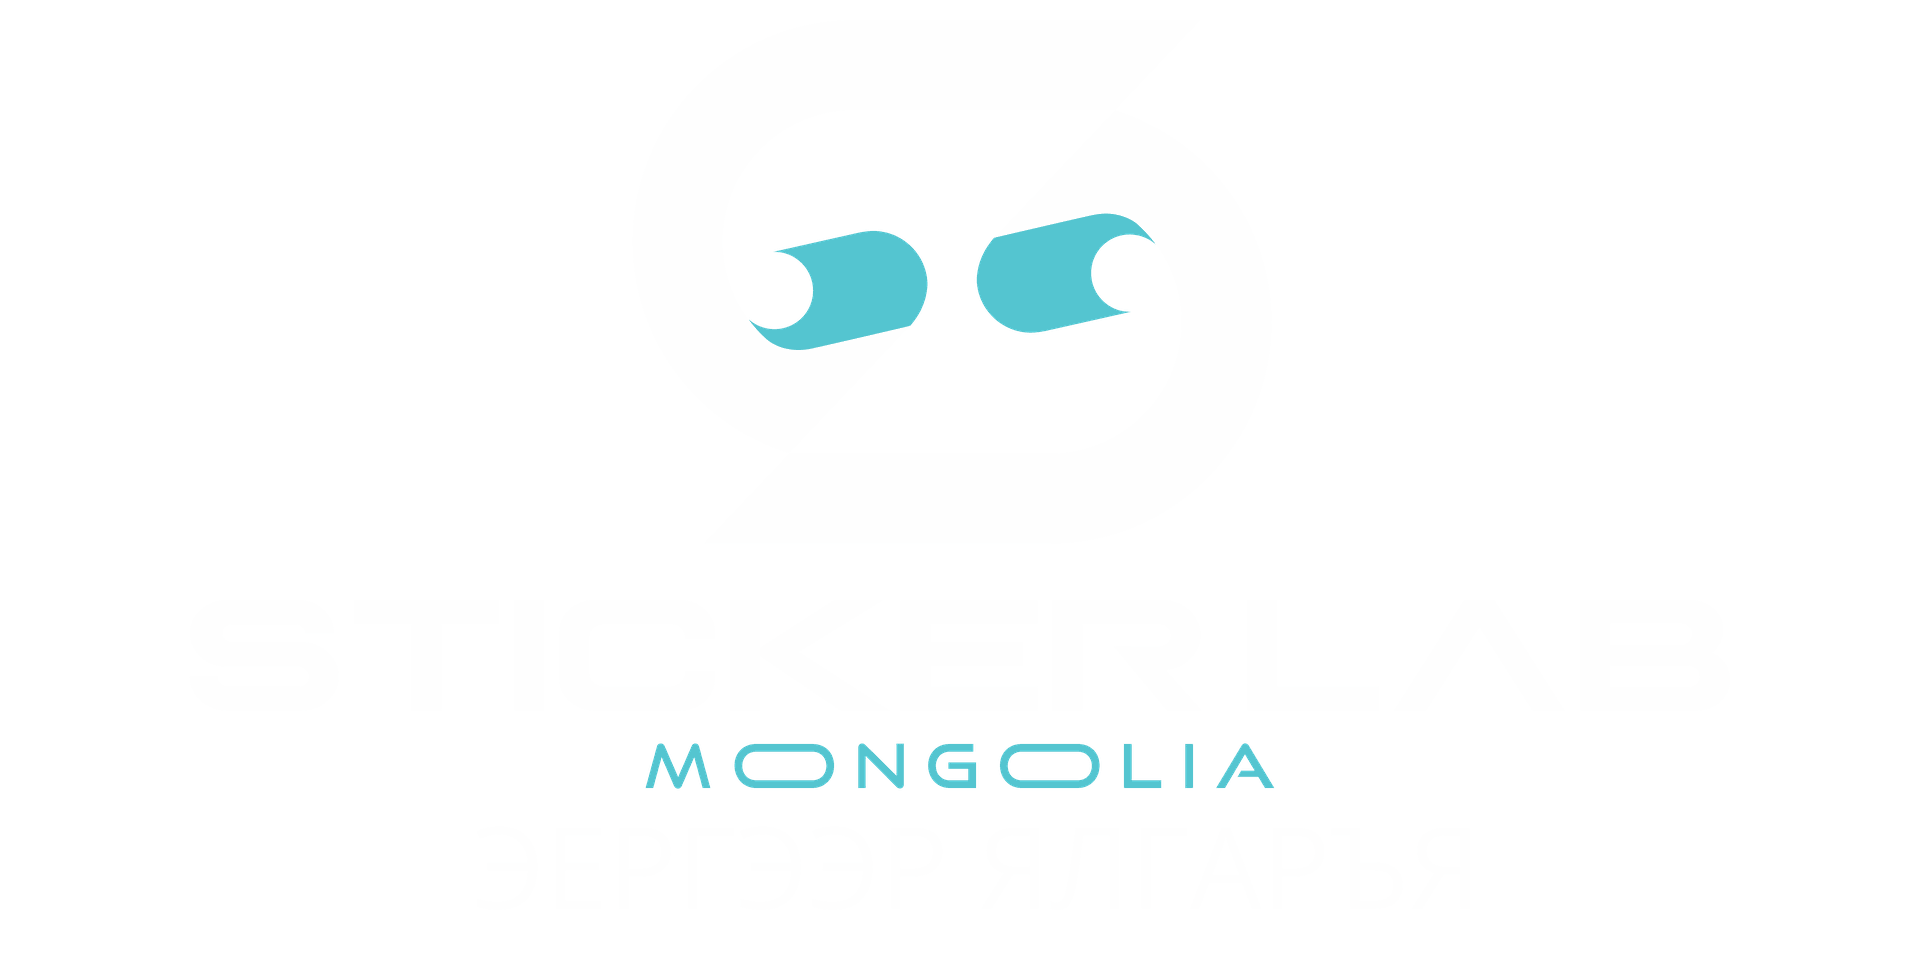 Sticker Lab mongolia